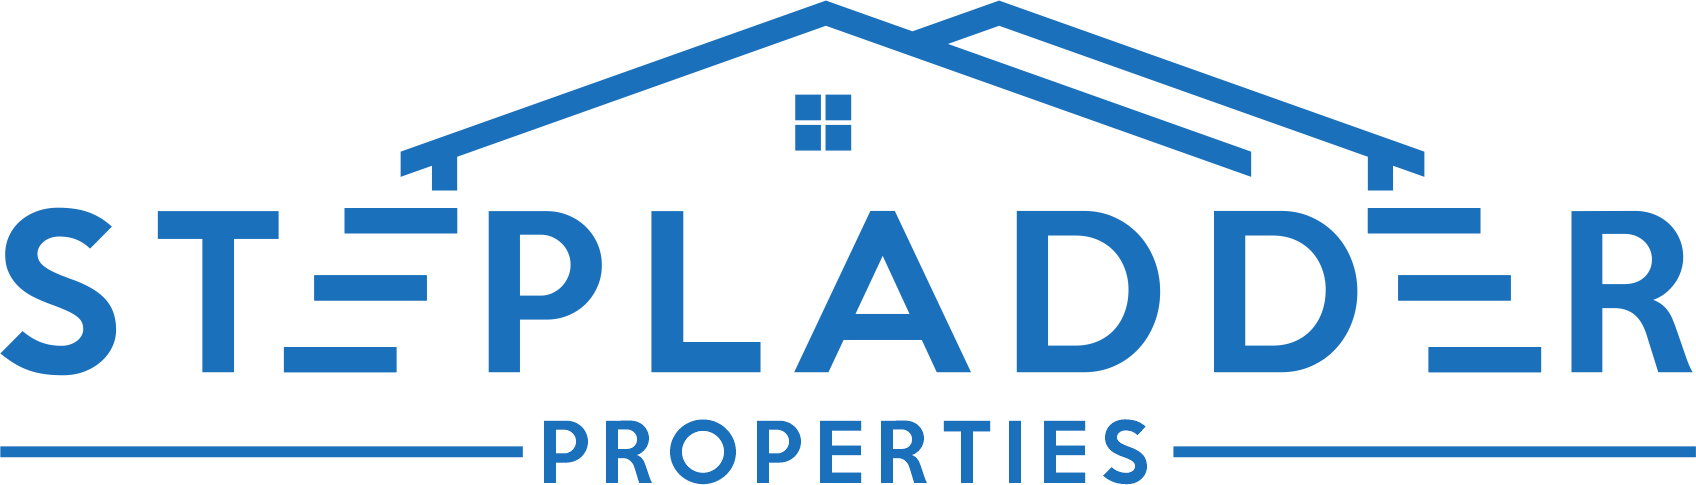 Stepladder Properties logo